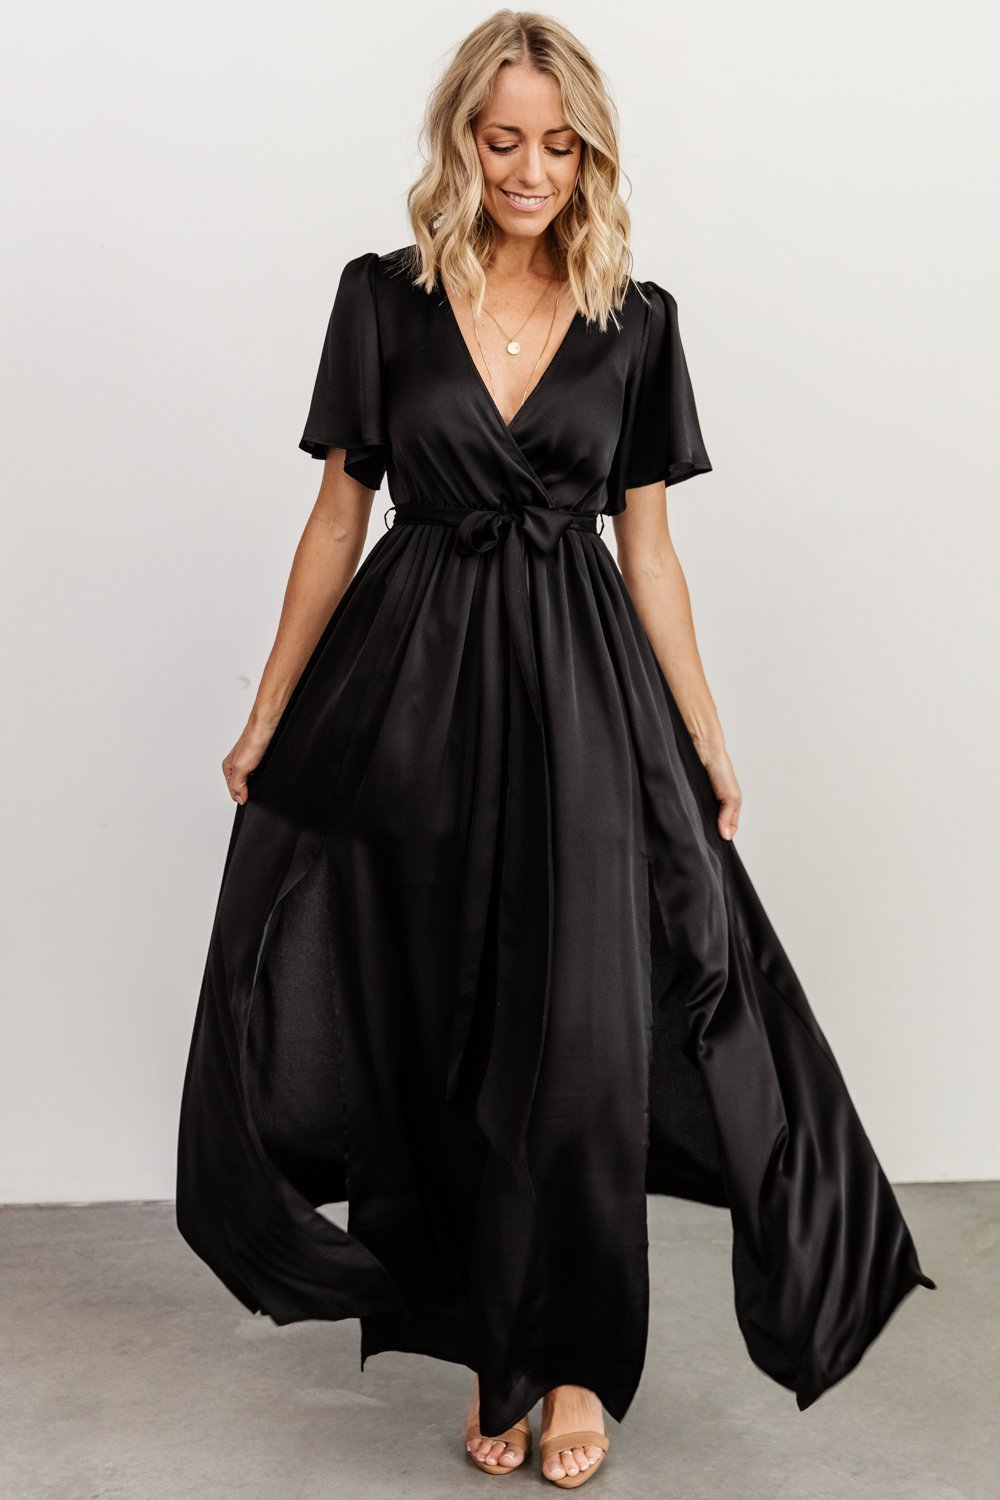 black satin maxi dress